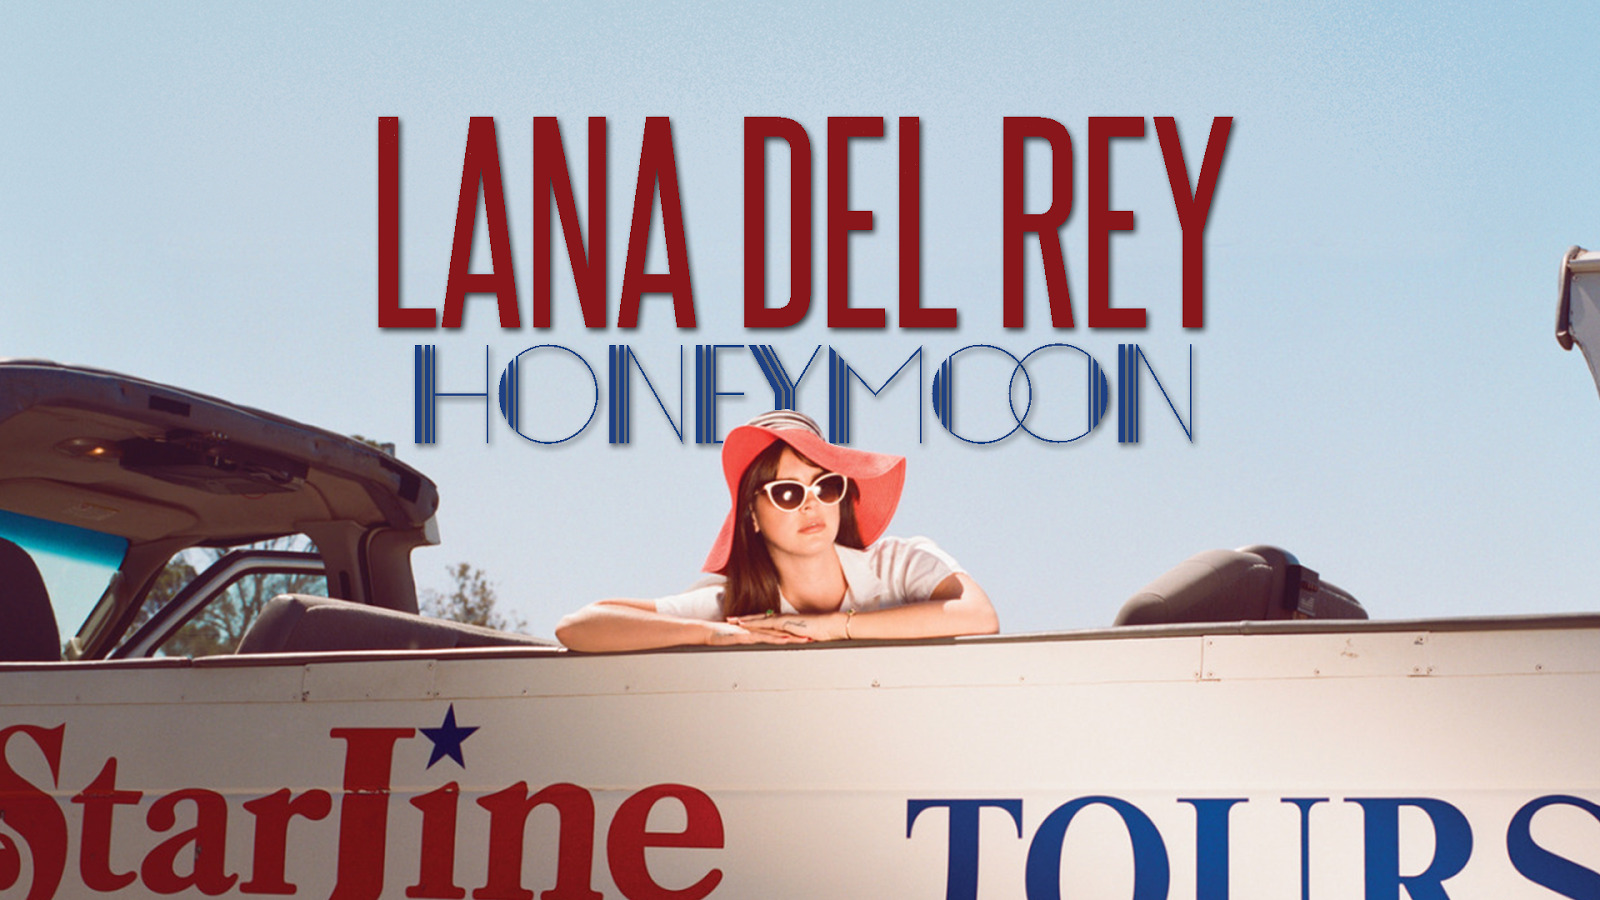 Honeymoon Lana del Rey фотосессия